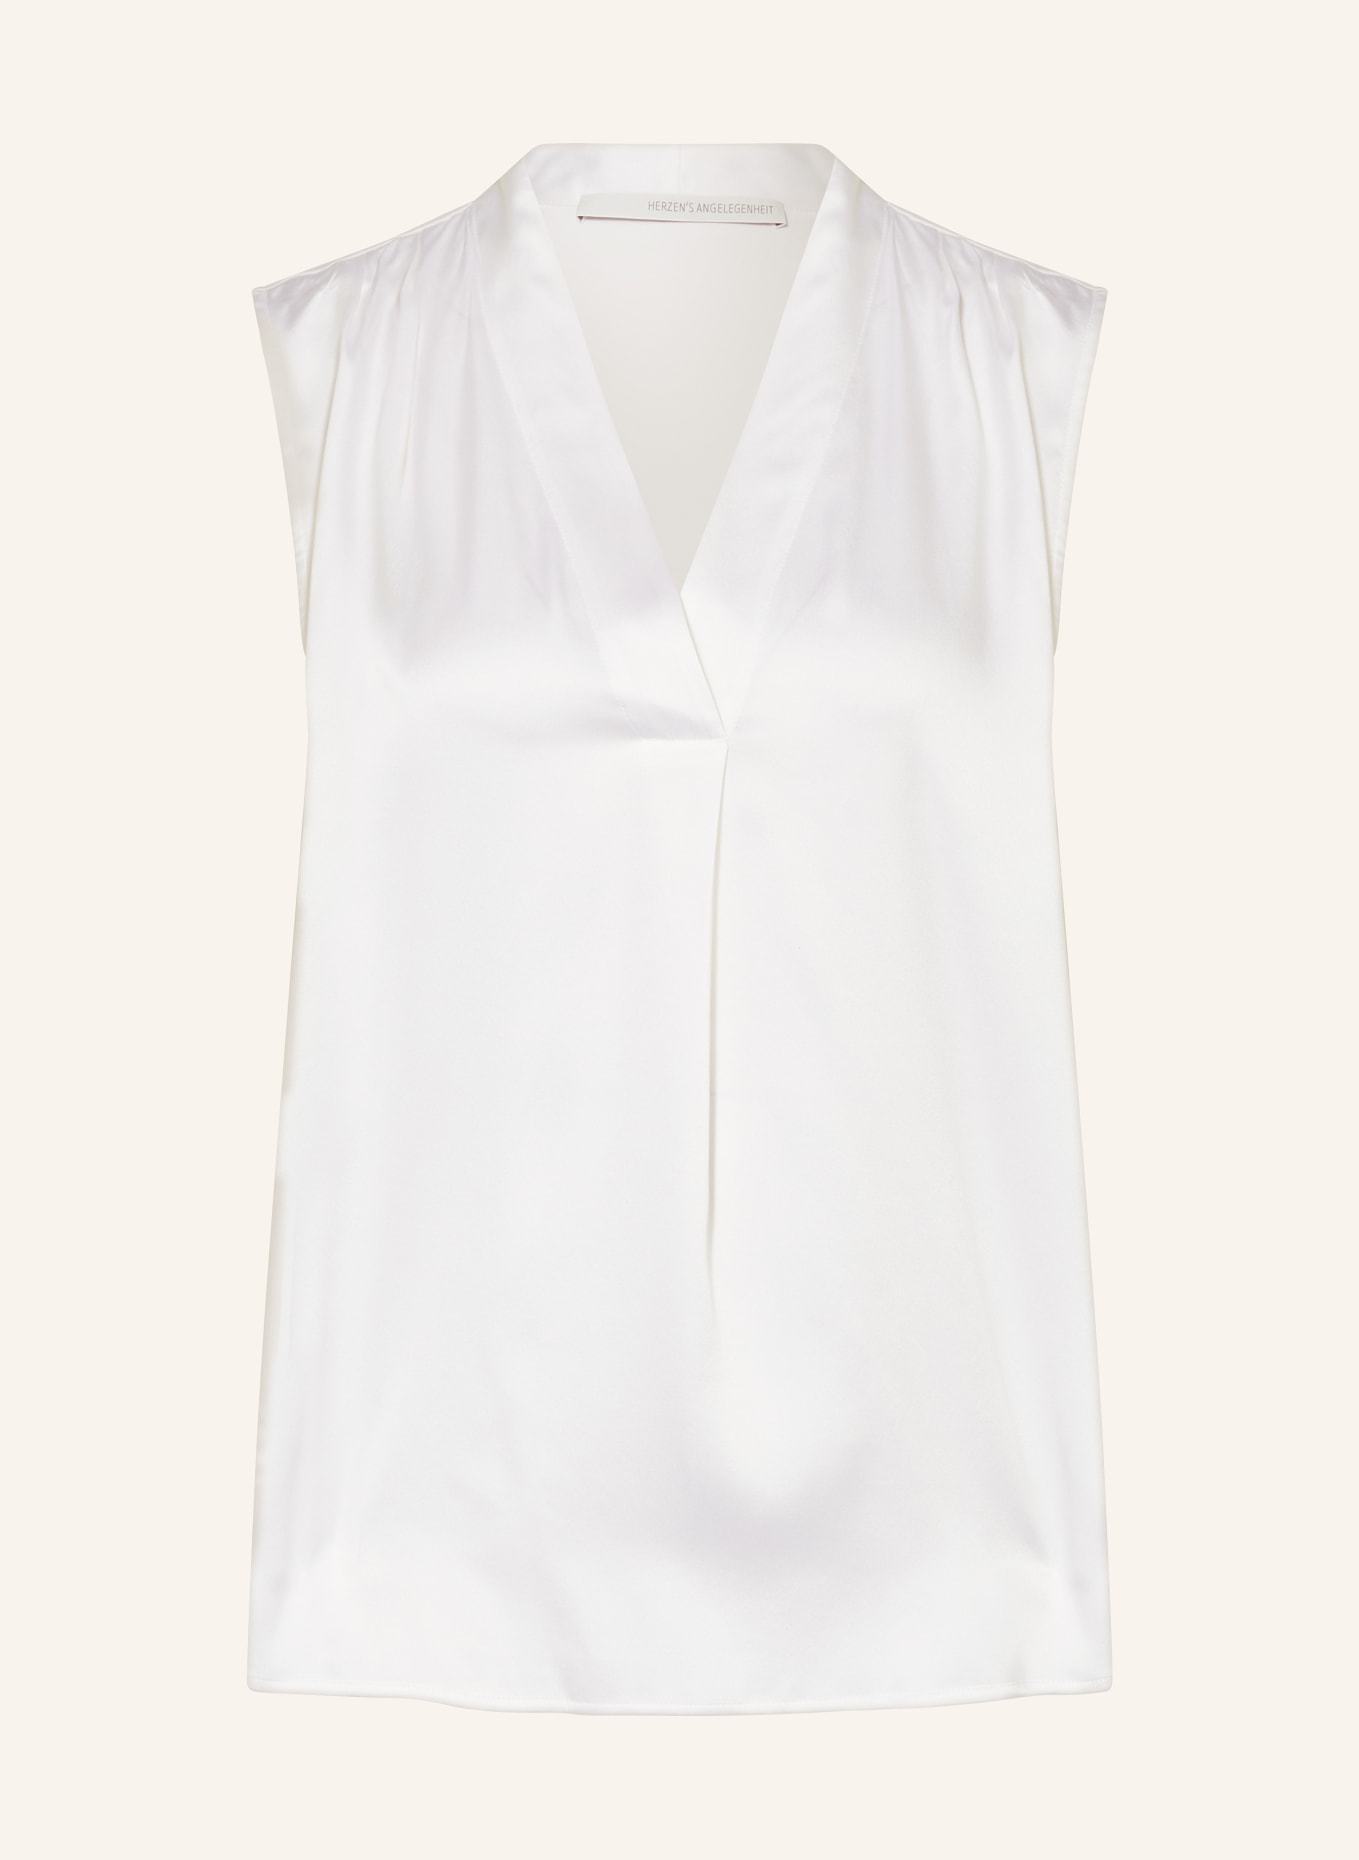 HERZEN'S ANGELEGENHEIT Blouse top made of silk, Color: WHITE (Image 1)